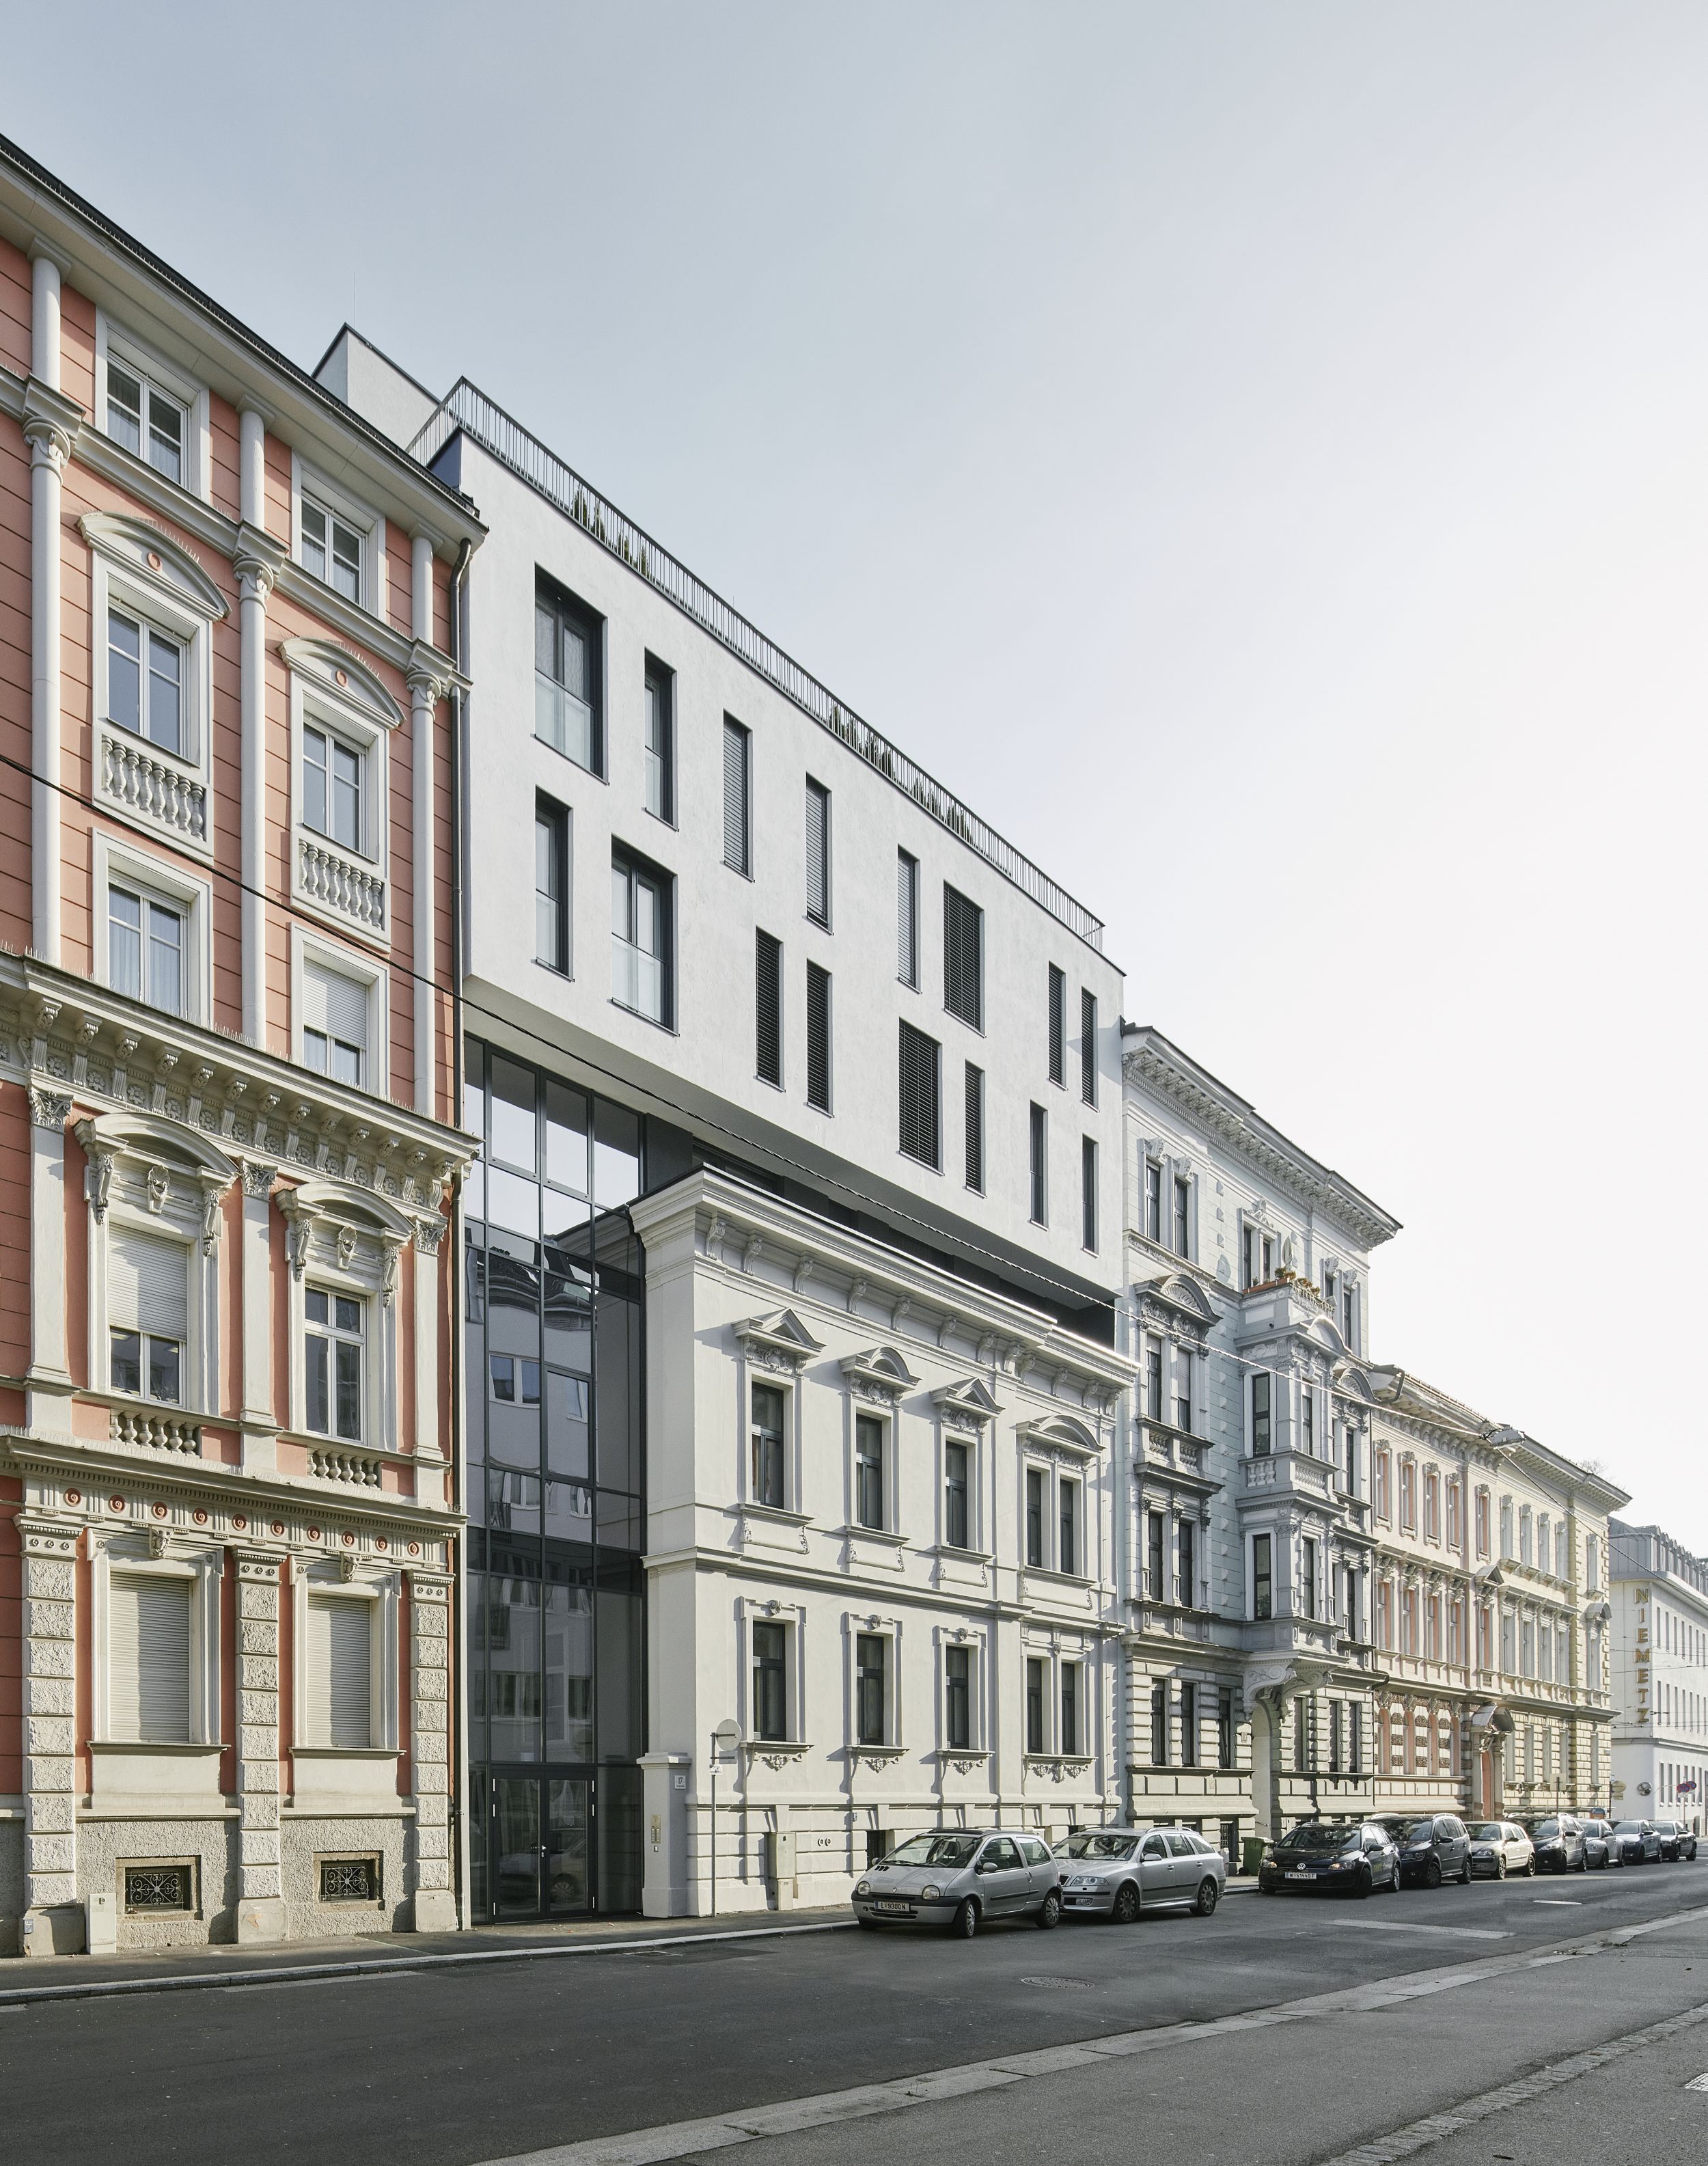 Fadingerstraße 17, 4020 Linz - Real estate project development